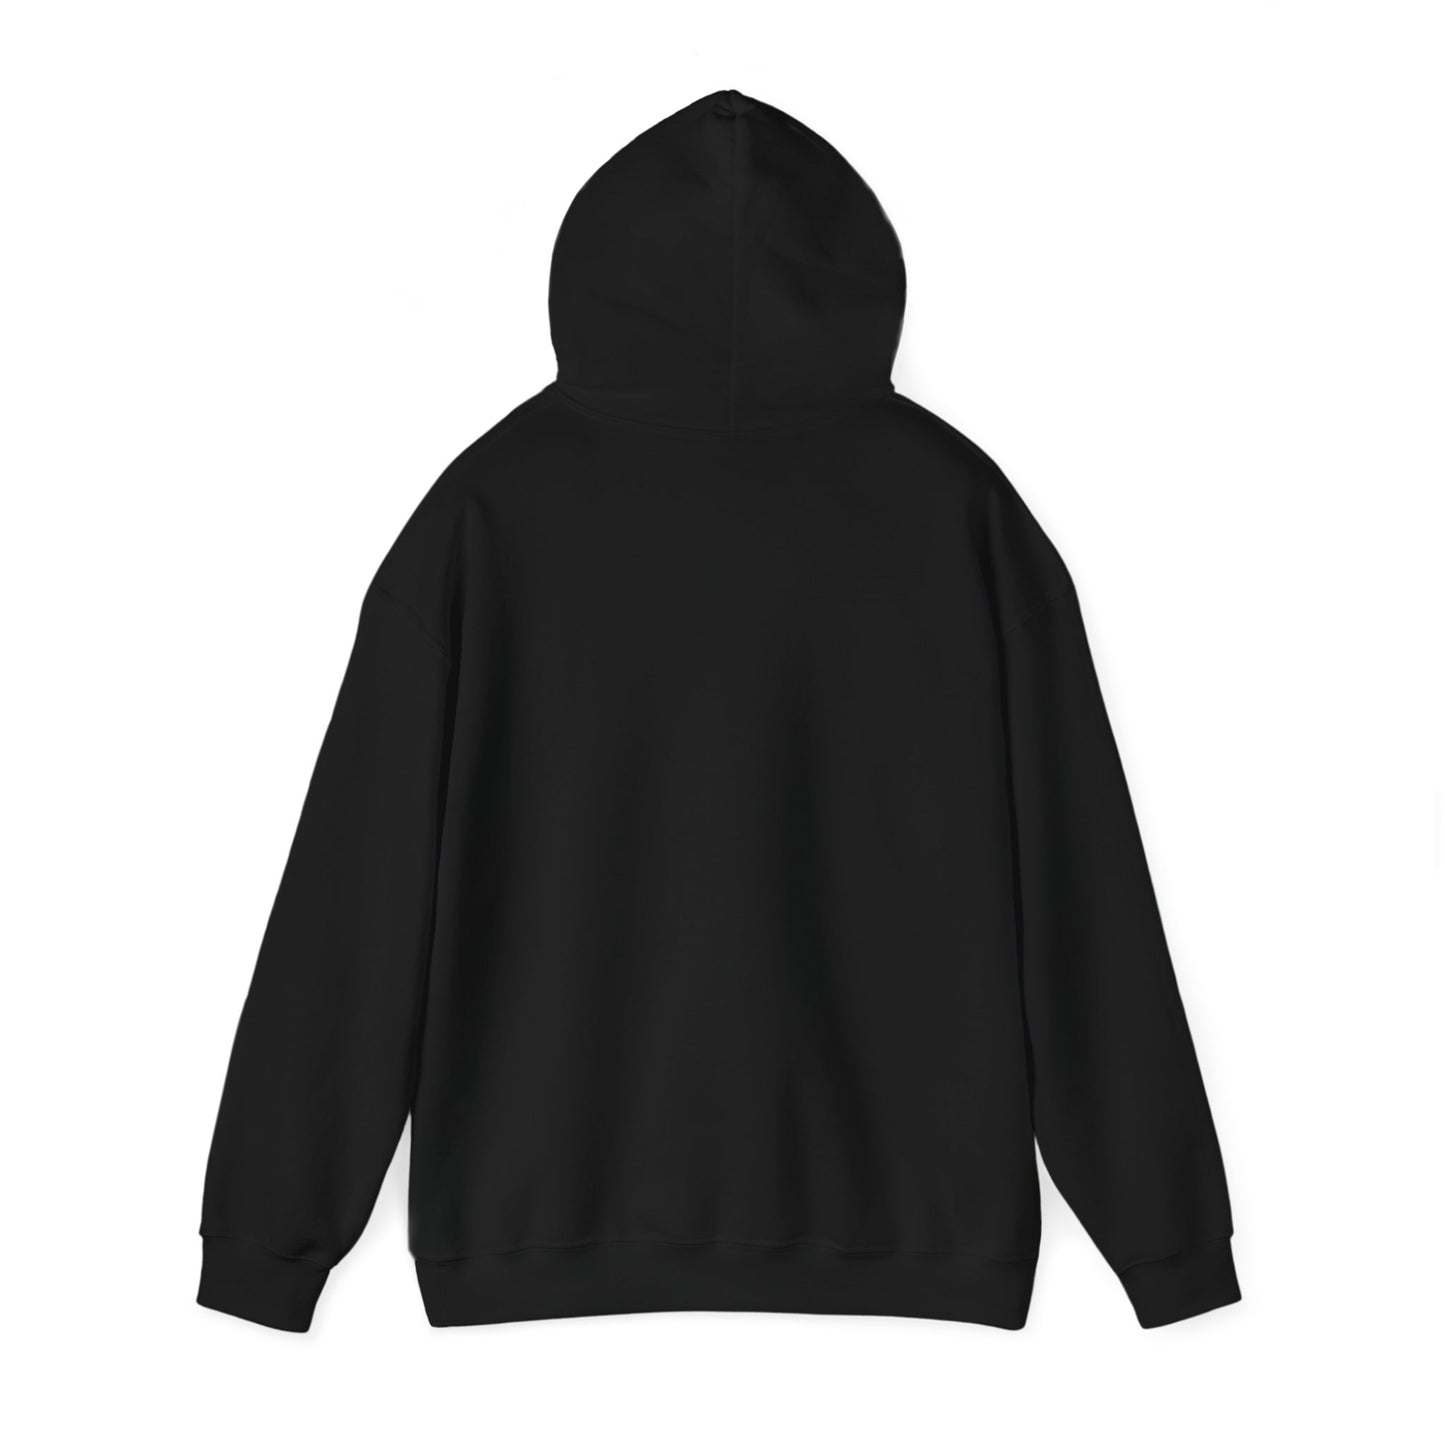 Be KIND - Hooded Sweatshirt